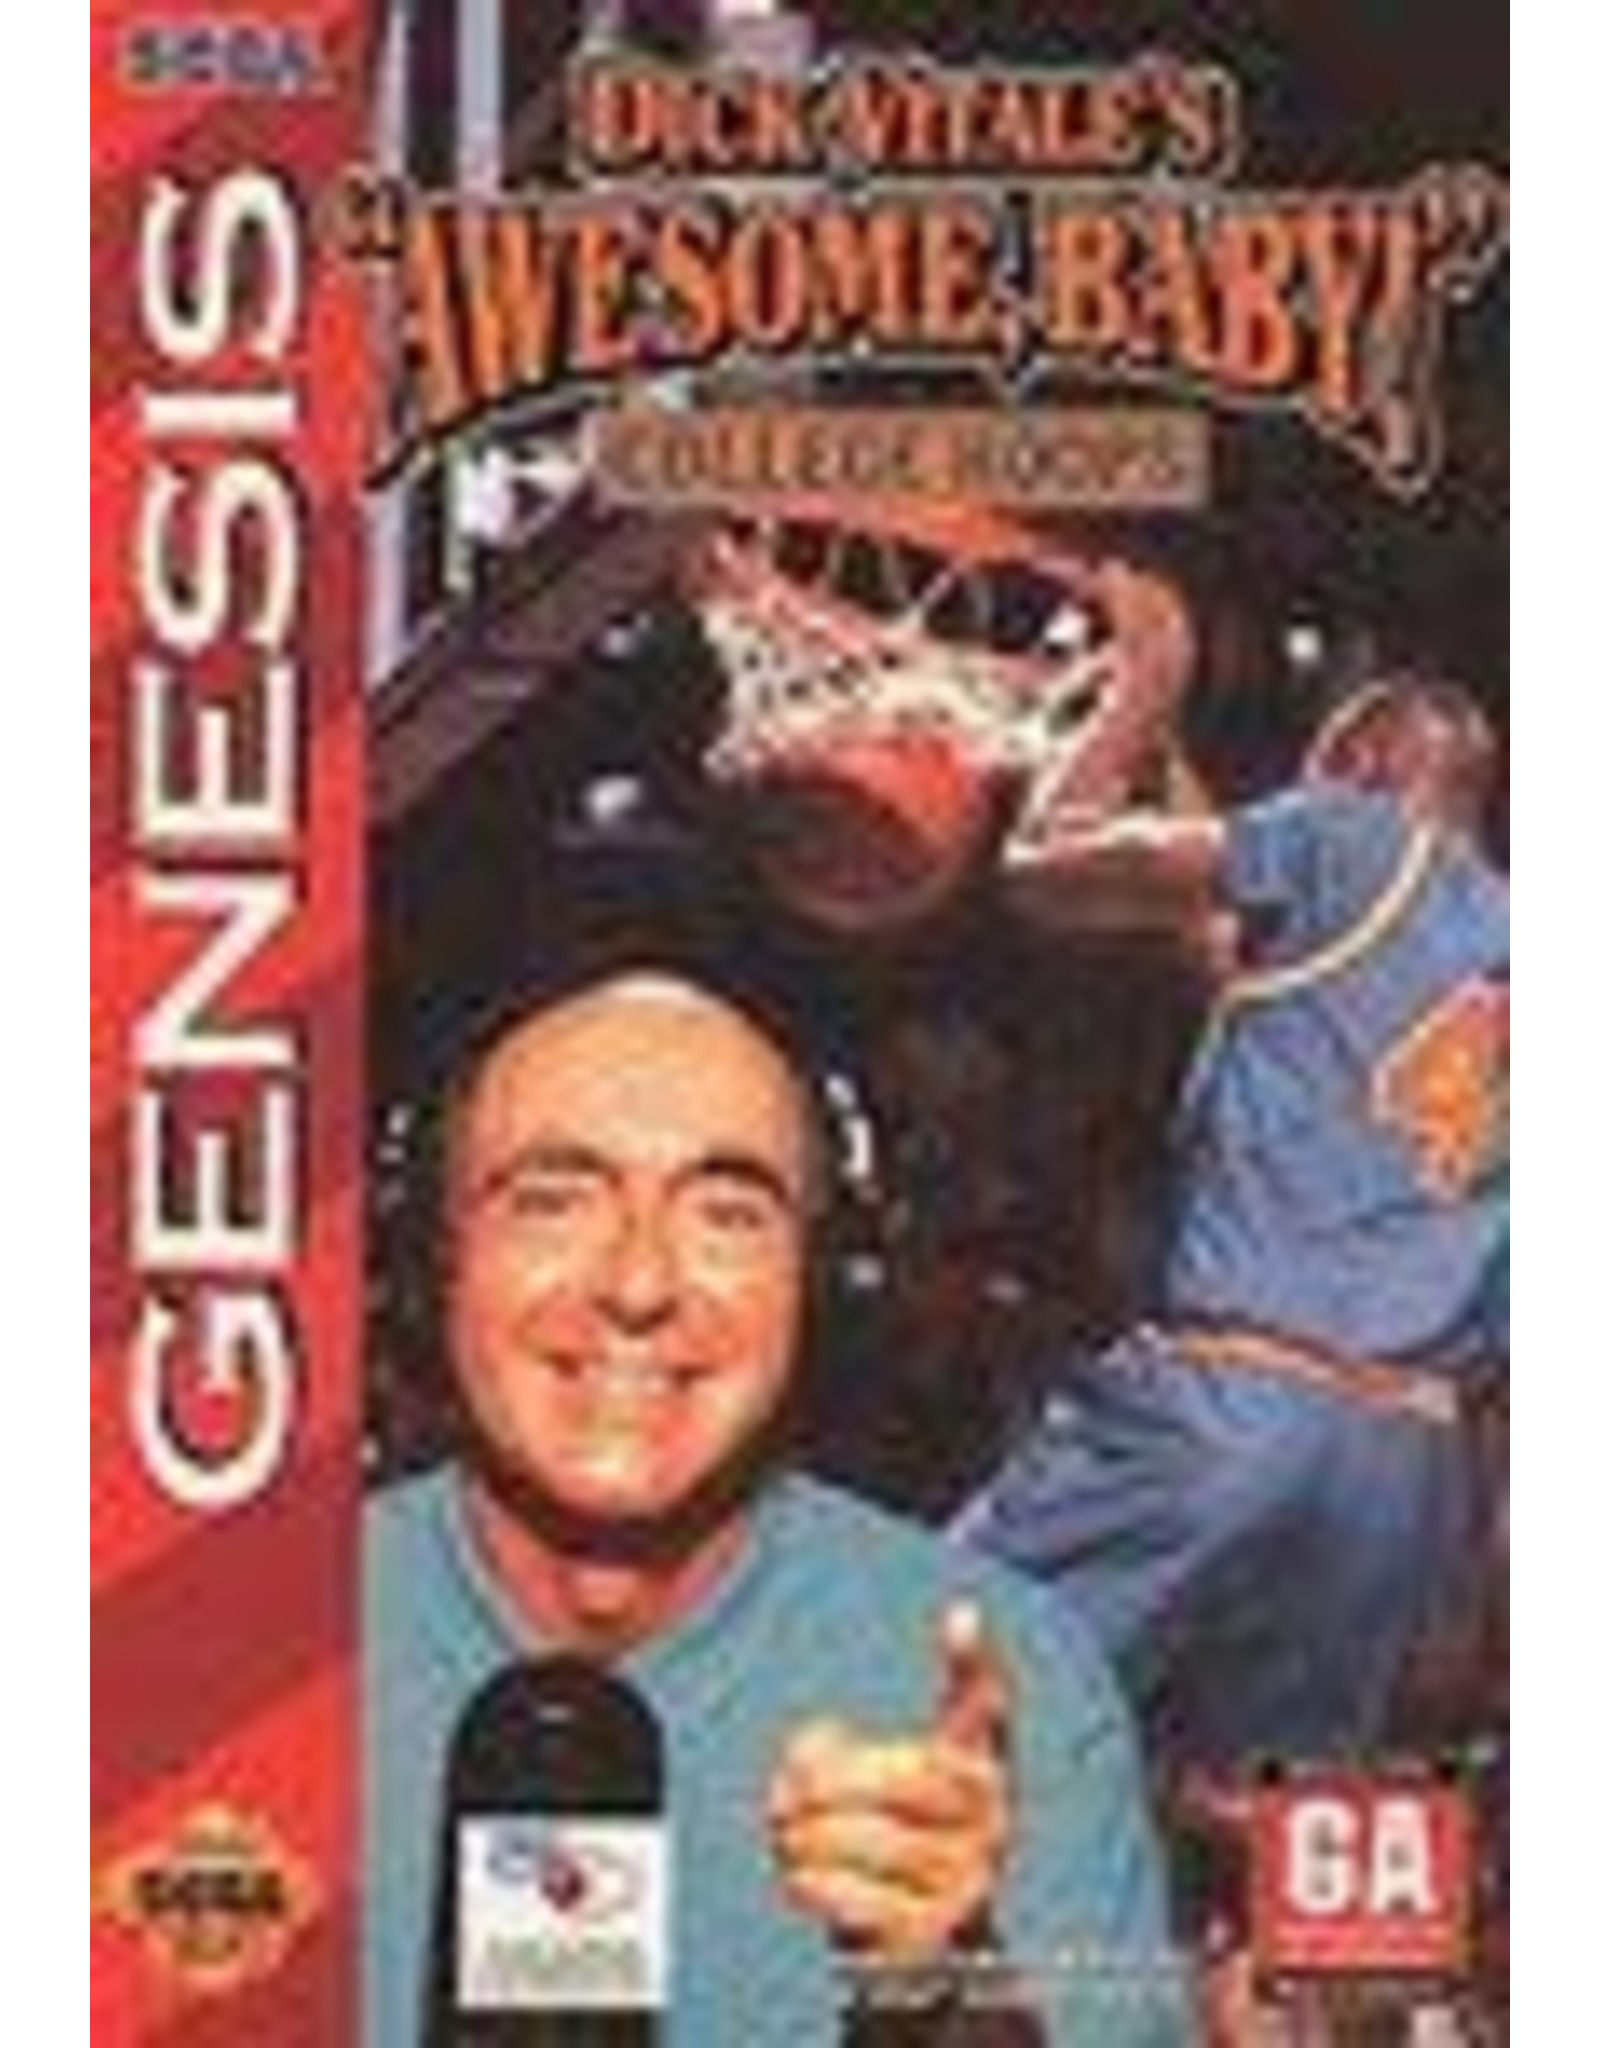 Sega Genesis Dick Vitale's Awesome Baby College Hoops (Cart Only)